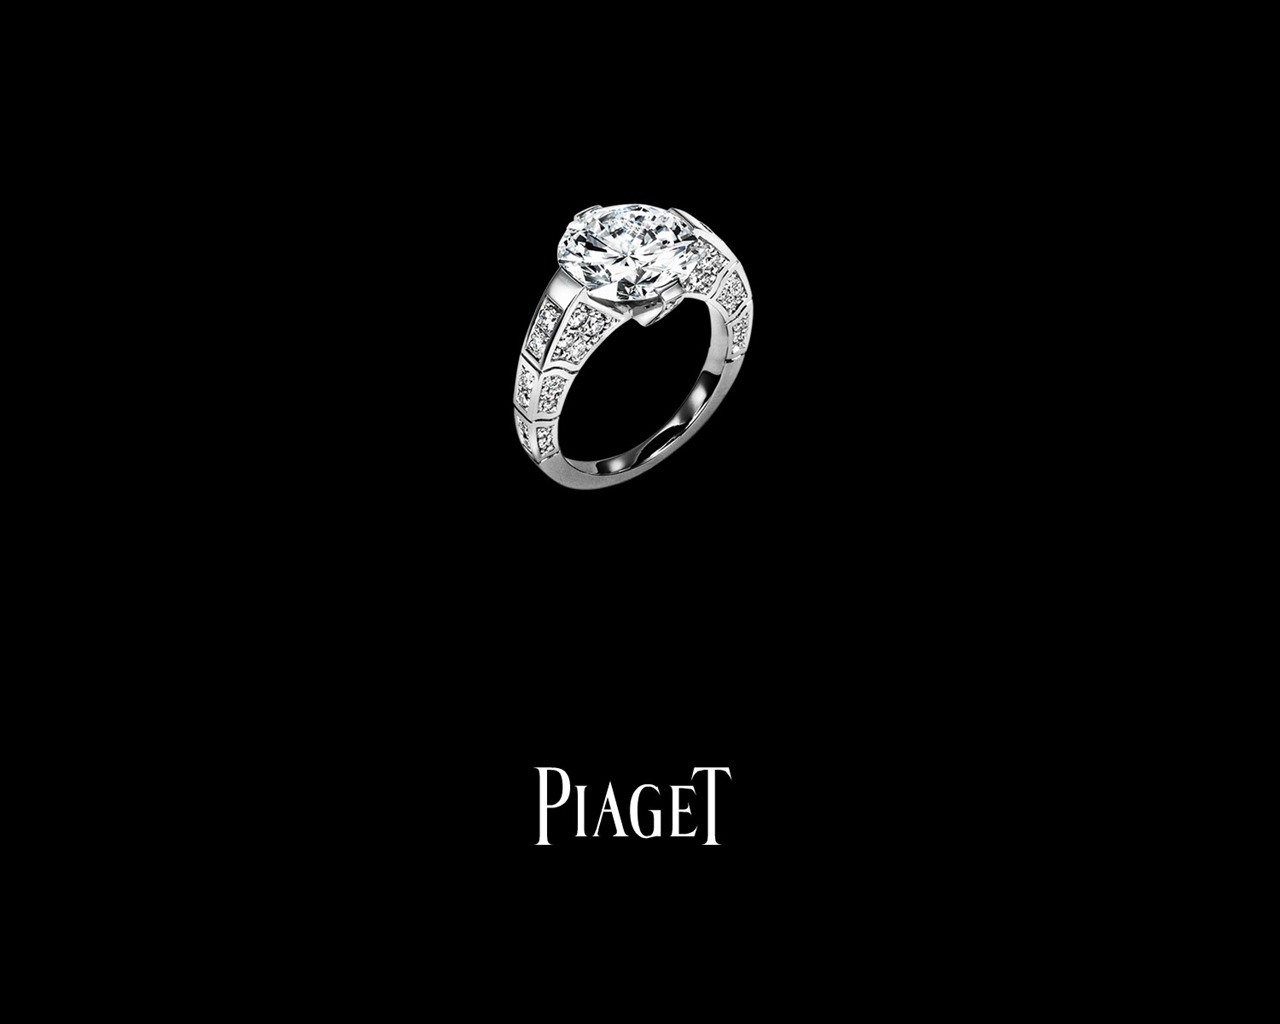 Piaget diamond jewelry wallpaper (4) #14 - 1280x1024